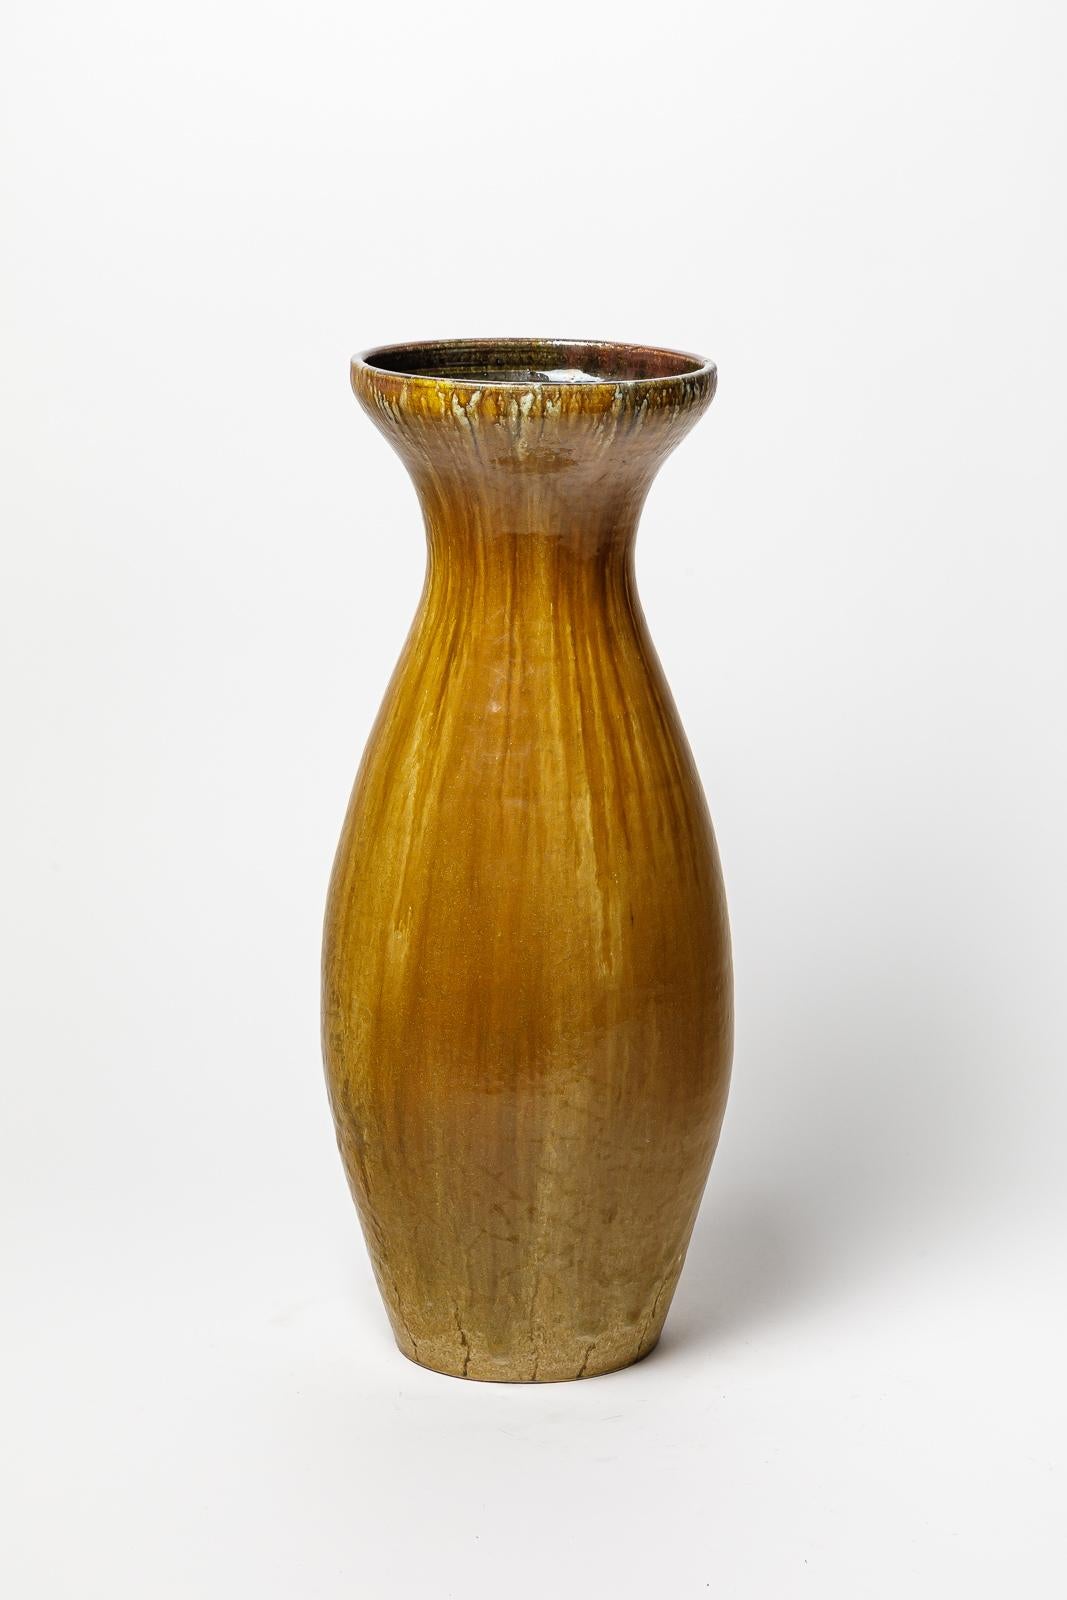 French Ocher glazed stoneware vase by Accolay, circa 1960-1970. For Sale